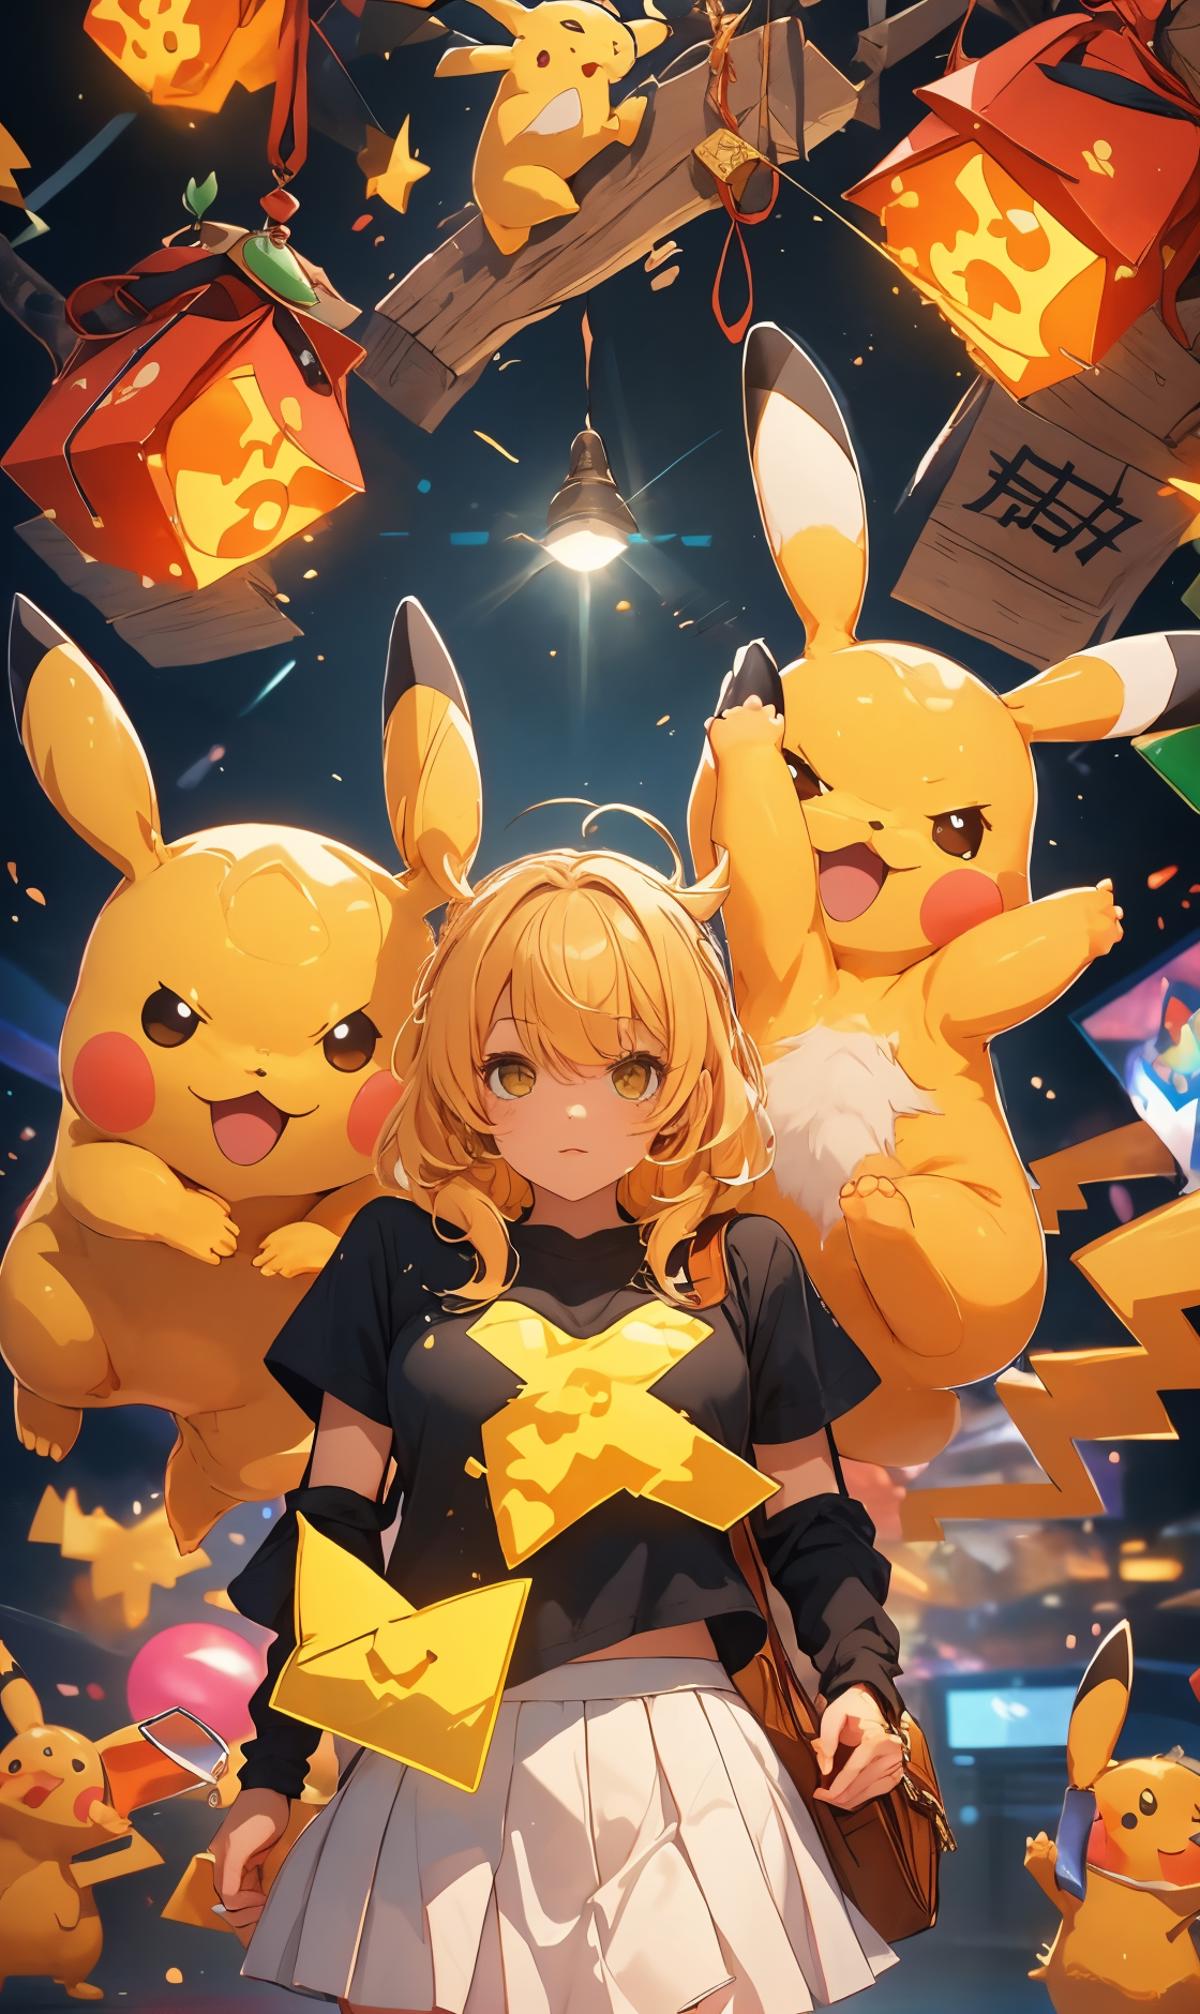 A woman standing between two yellow stuffed Pokemon characters.